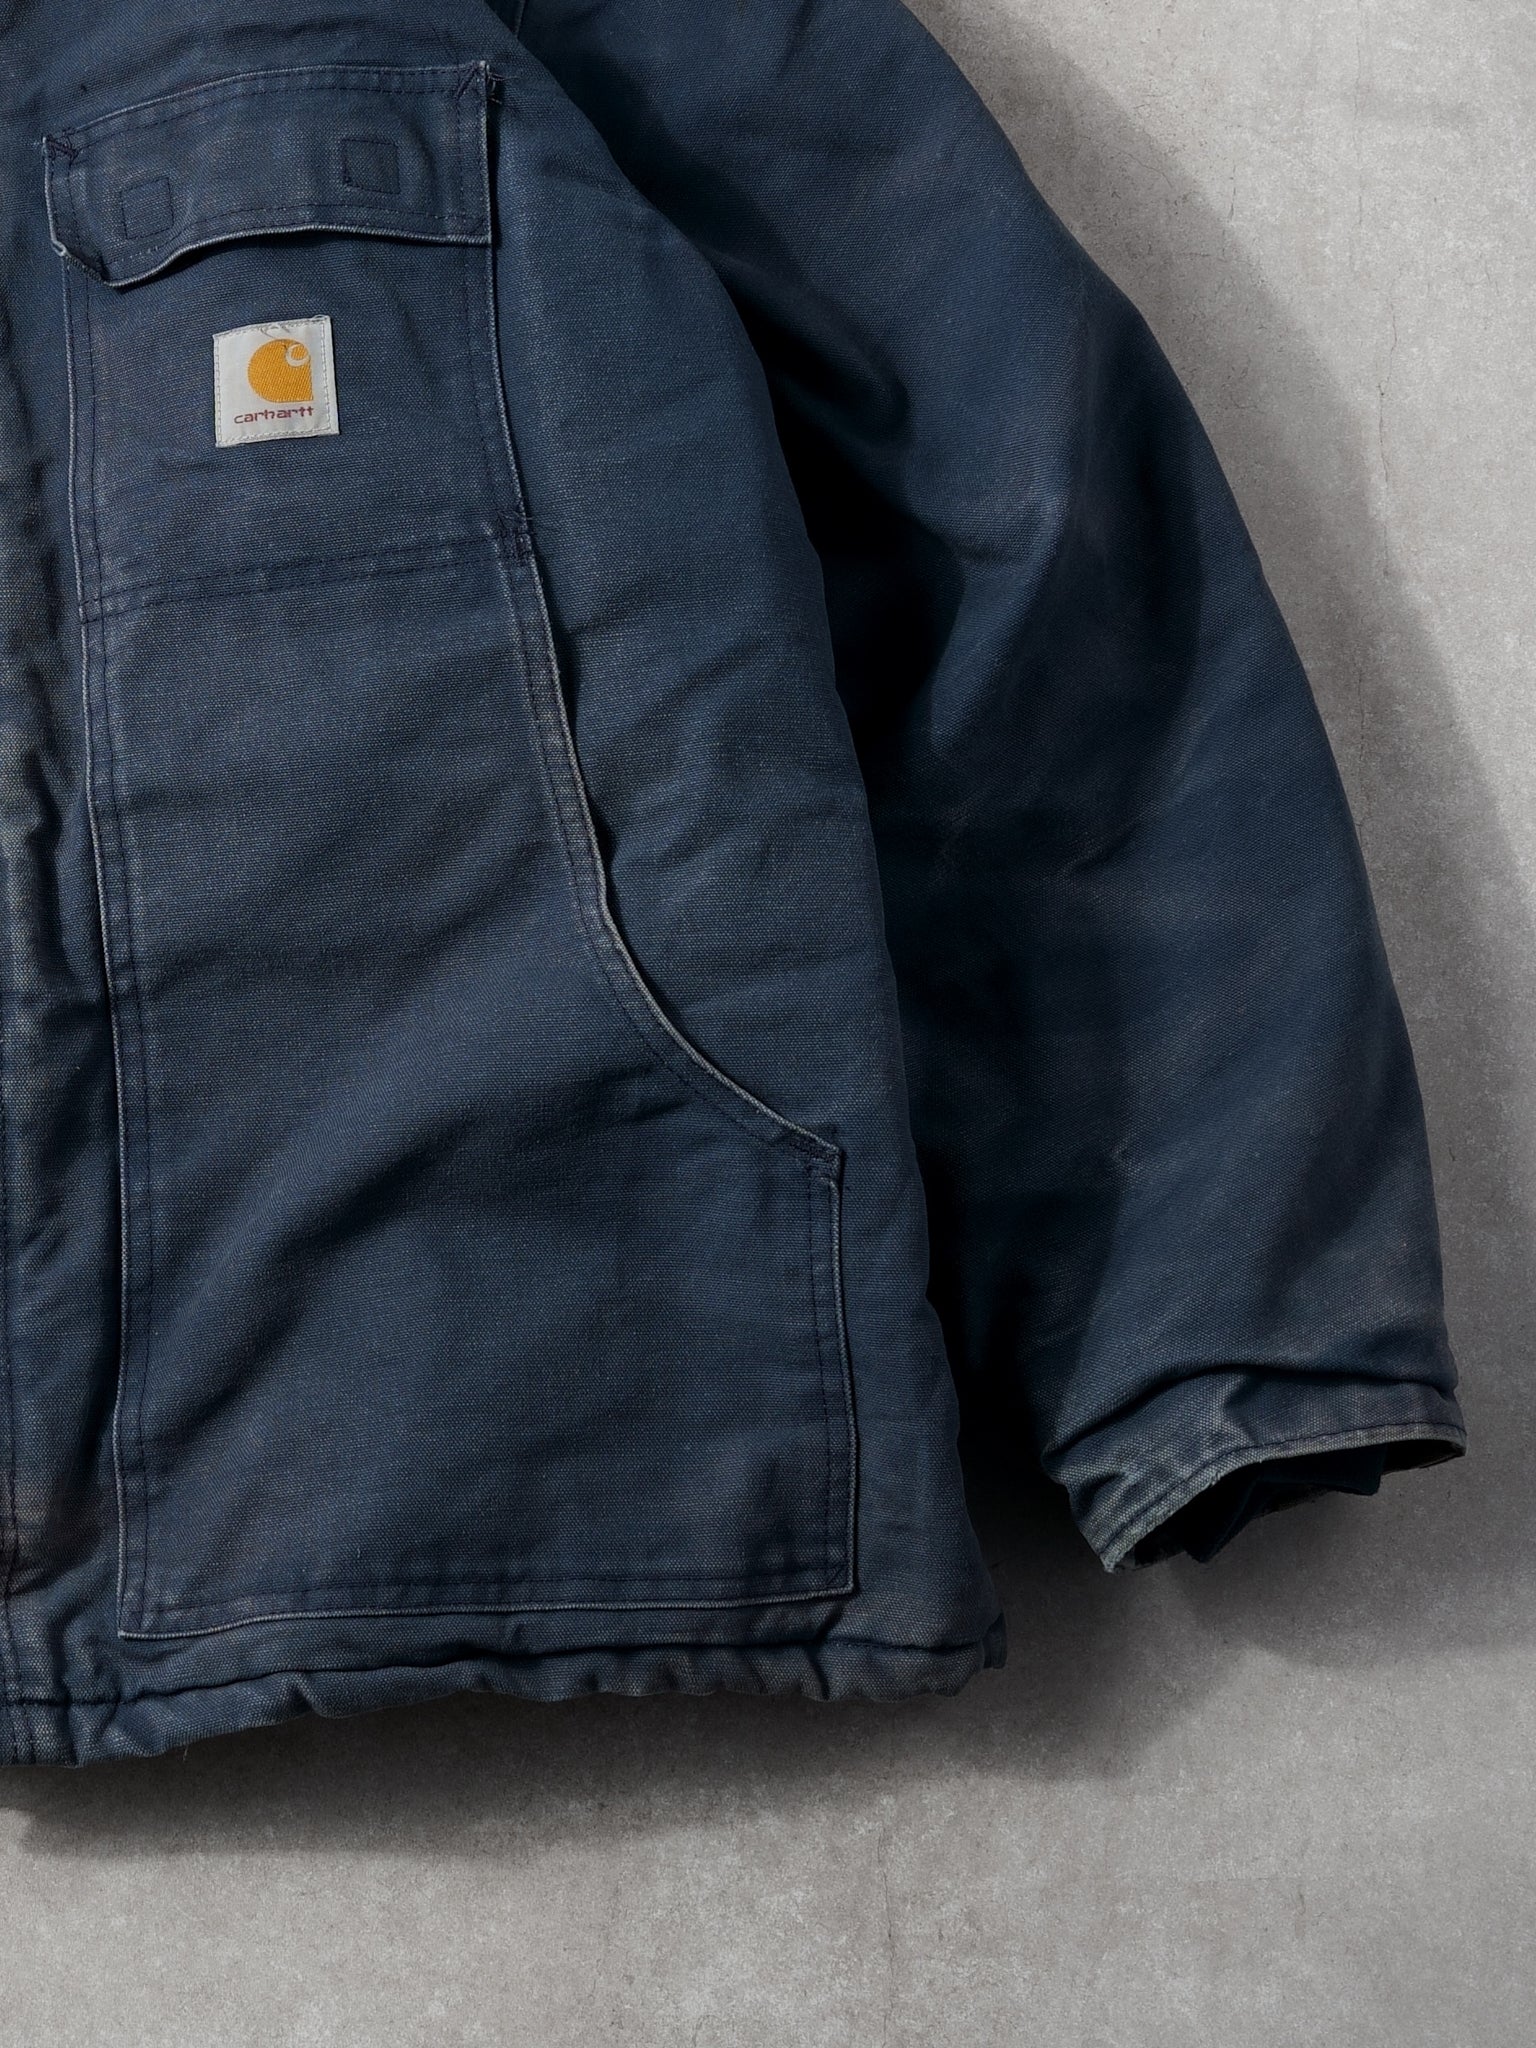 Vintage 90s Blue Carhartt Workwear Collared Jacket (XL)